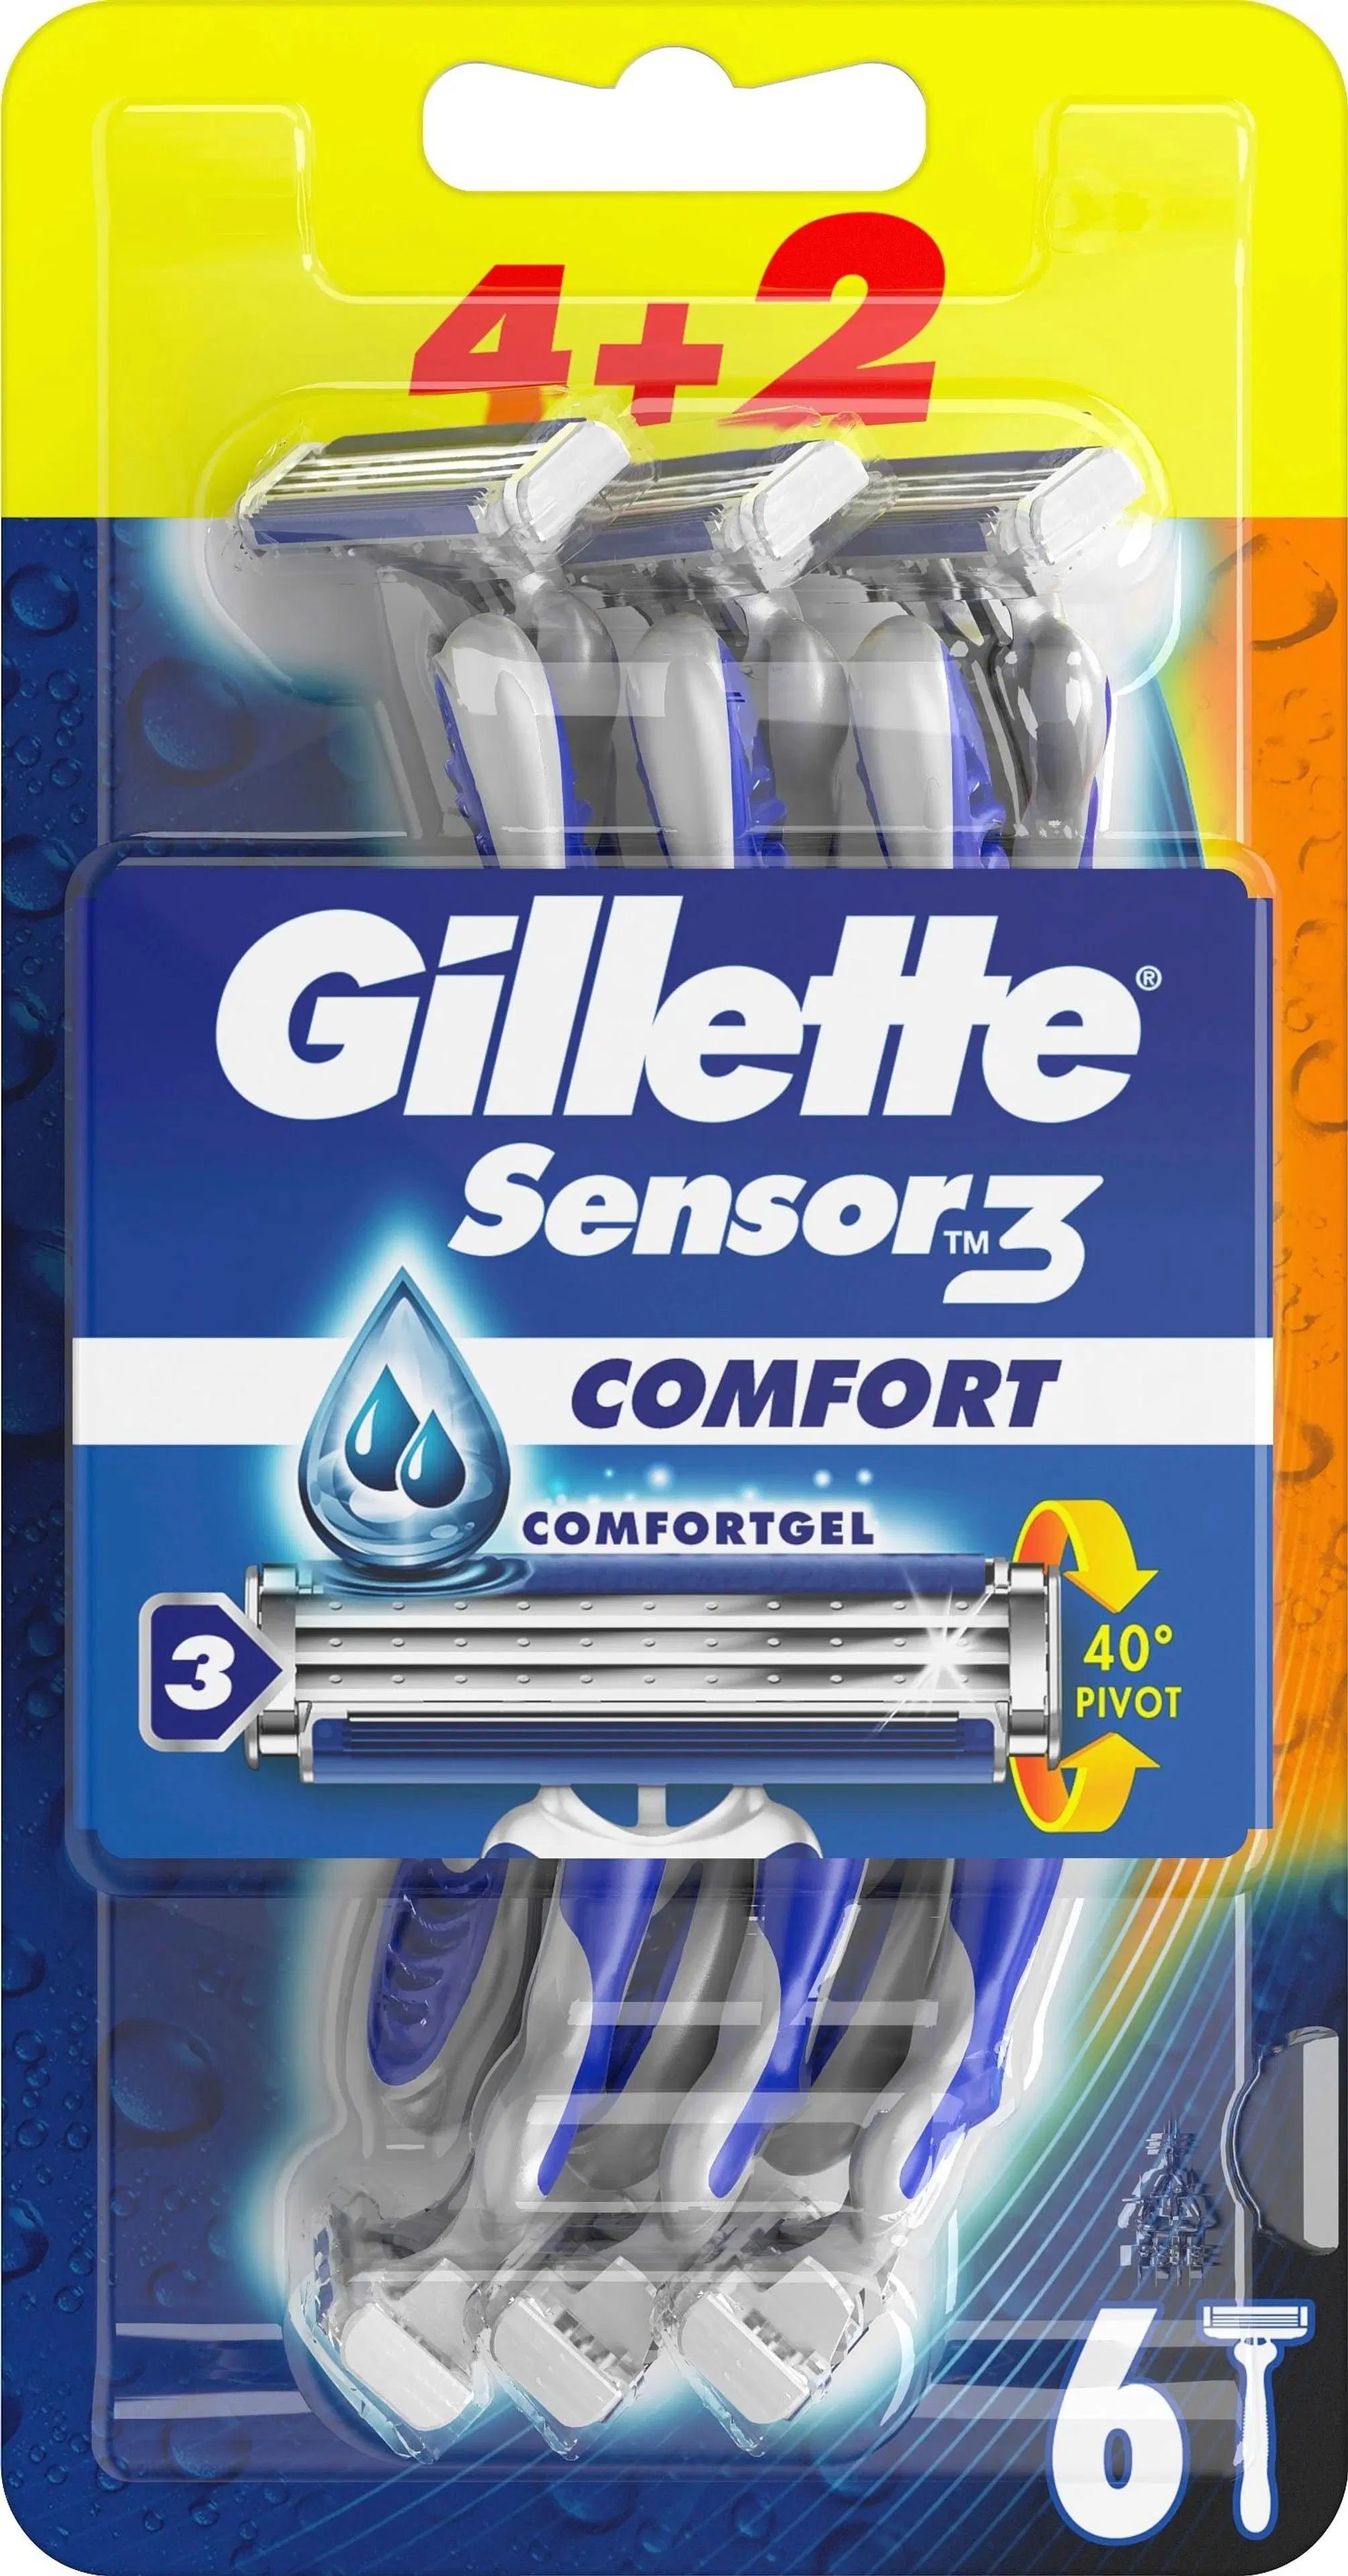 Gillette 4+2kpl Sensor3 Comfort varsiterä